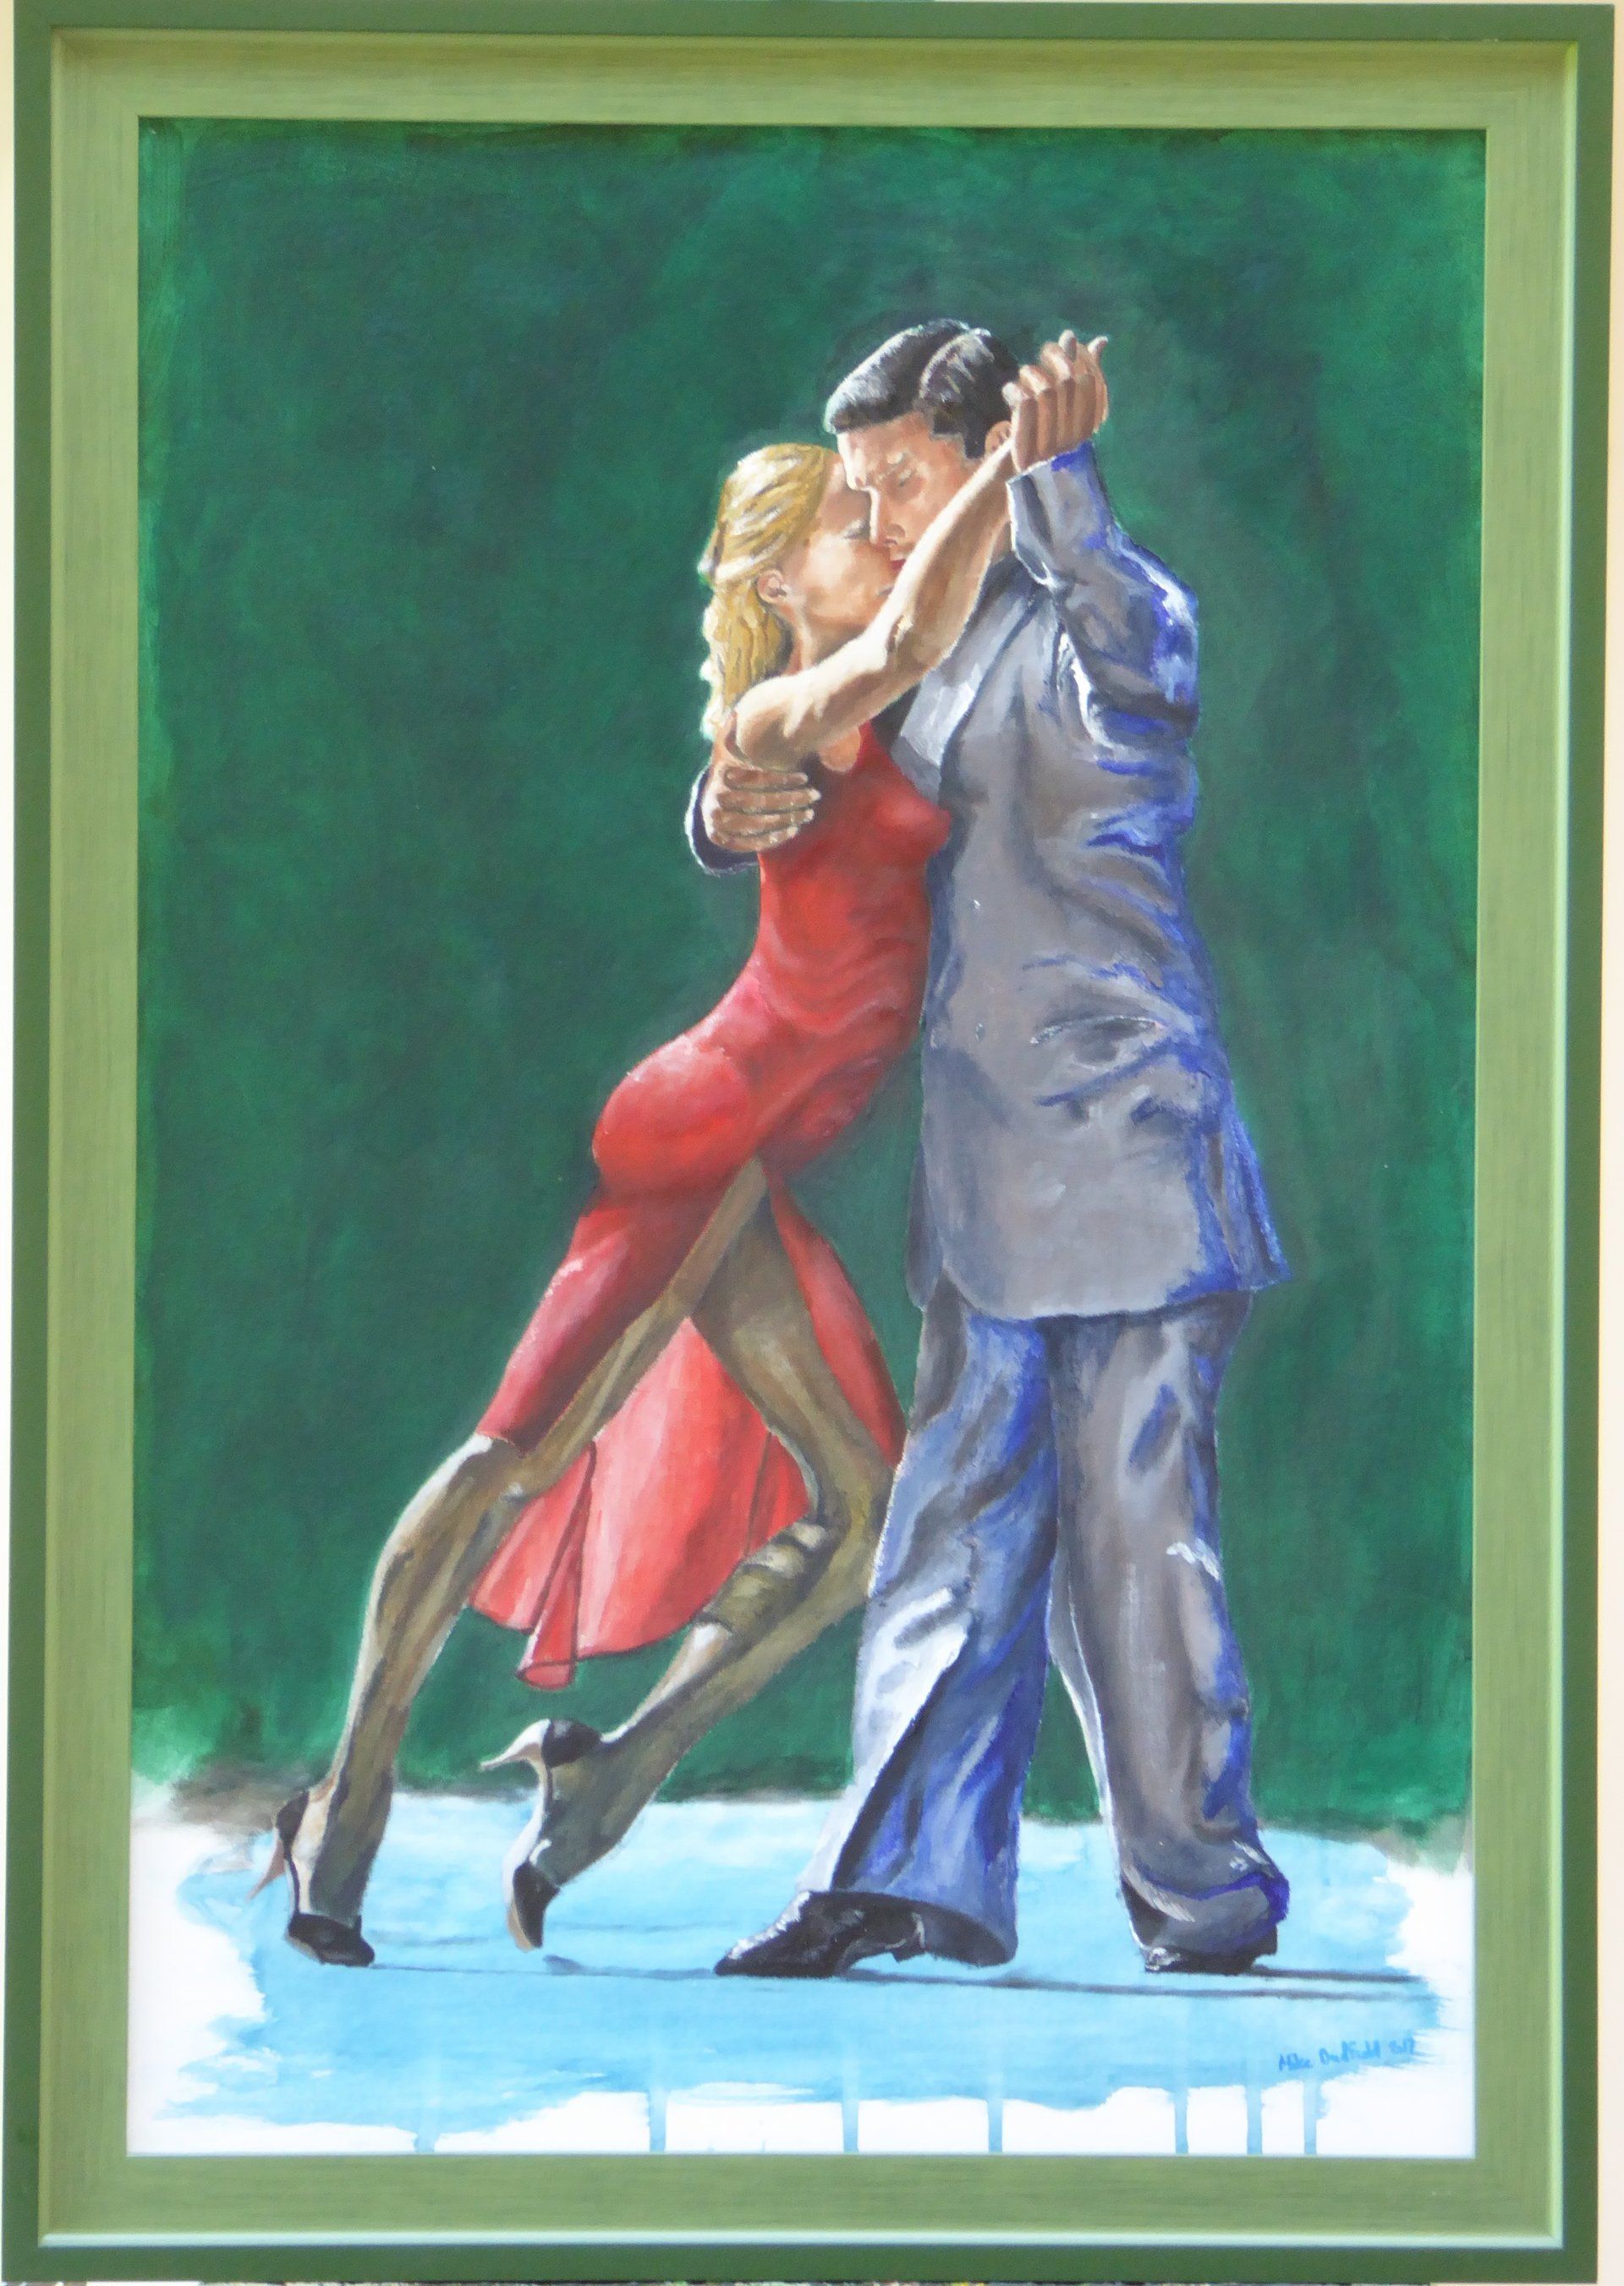 Hot couple dancing. Tango art